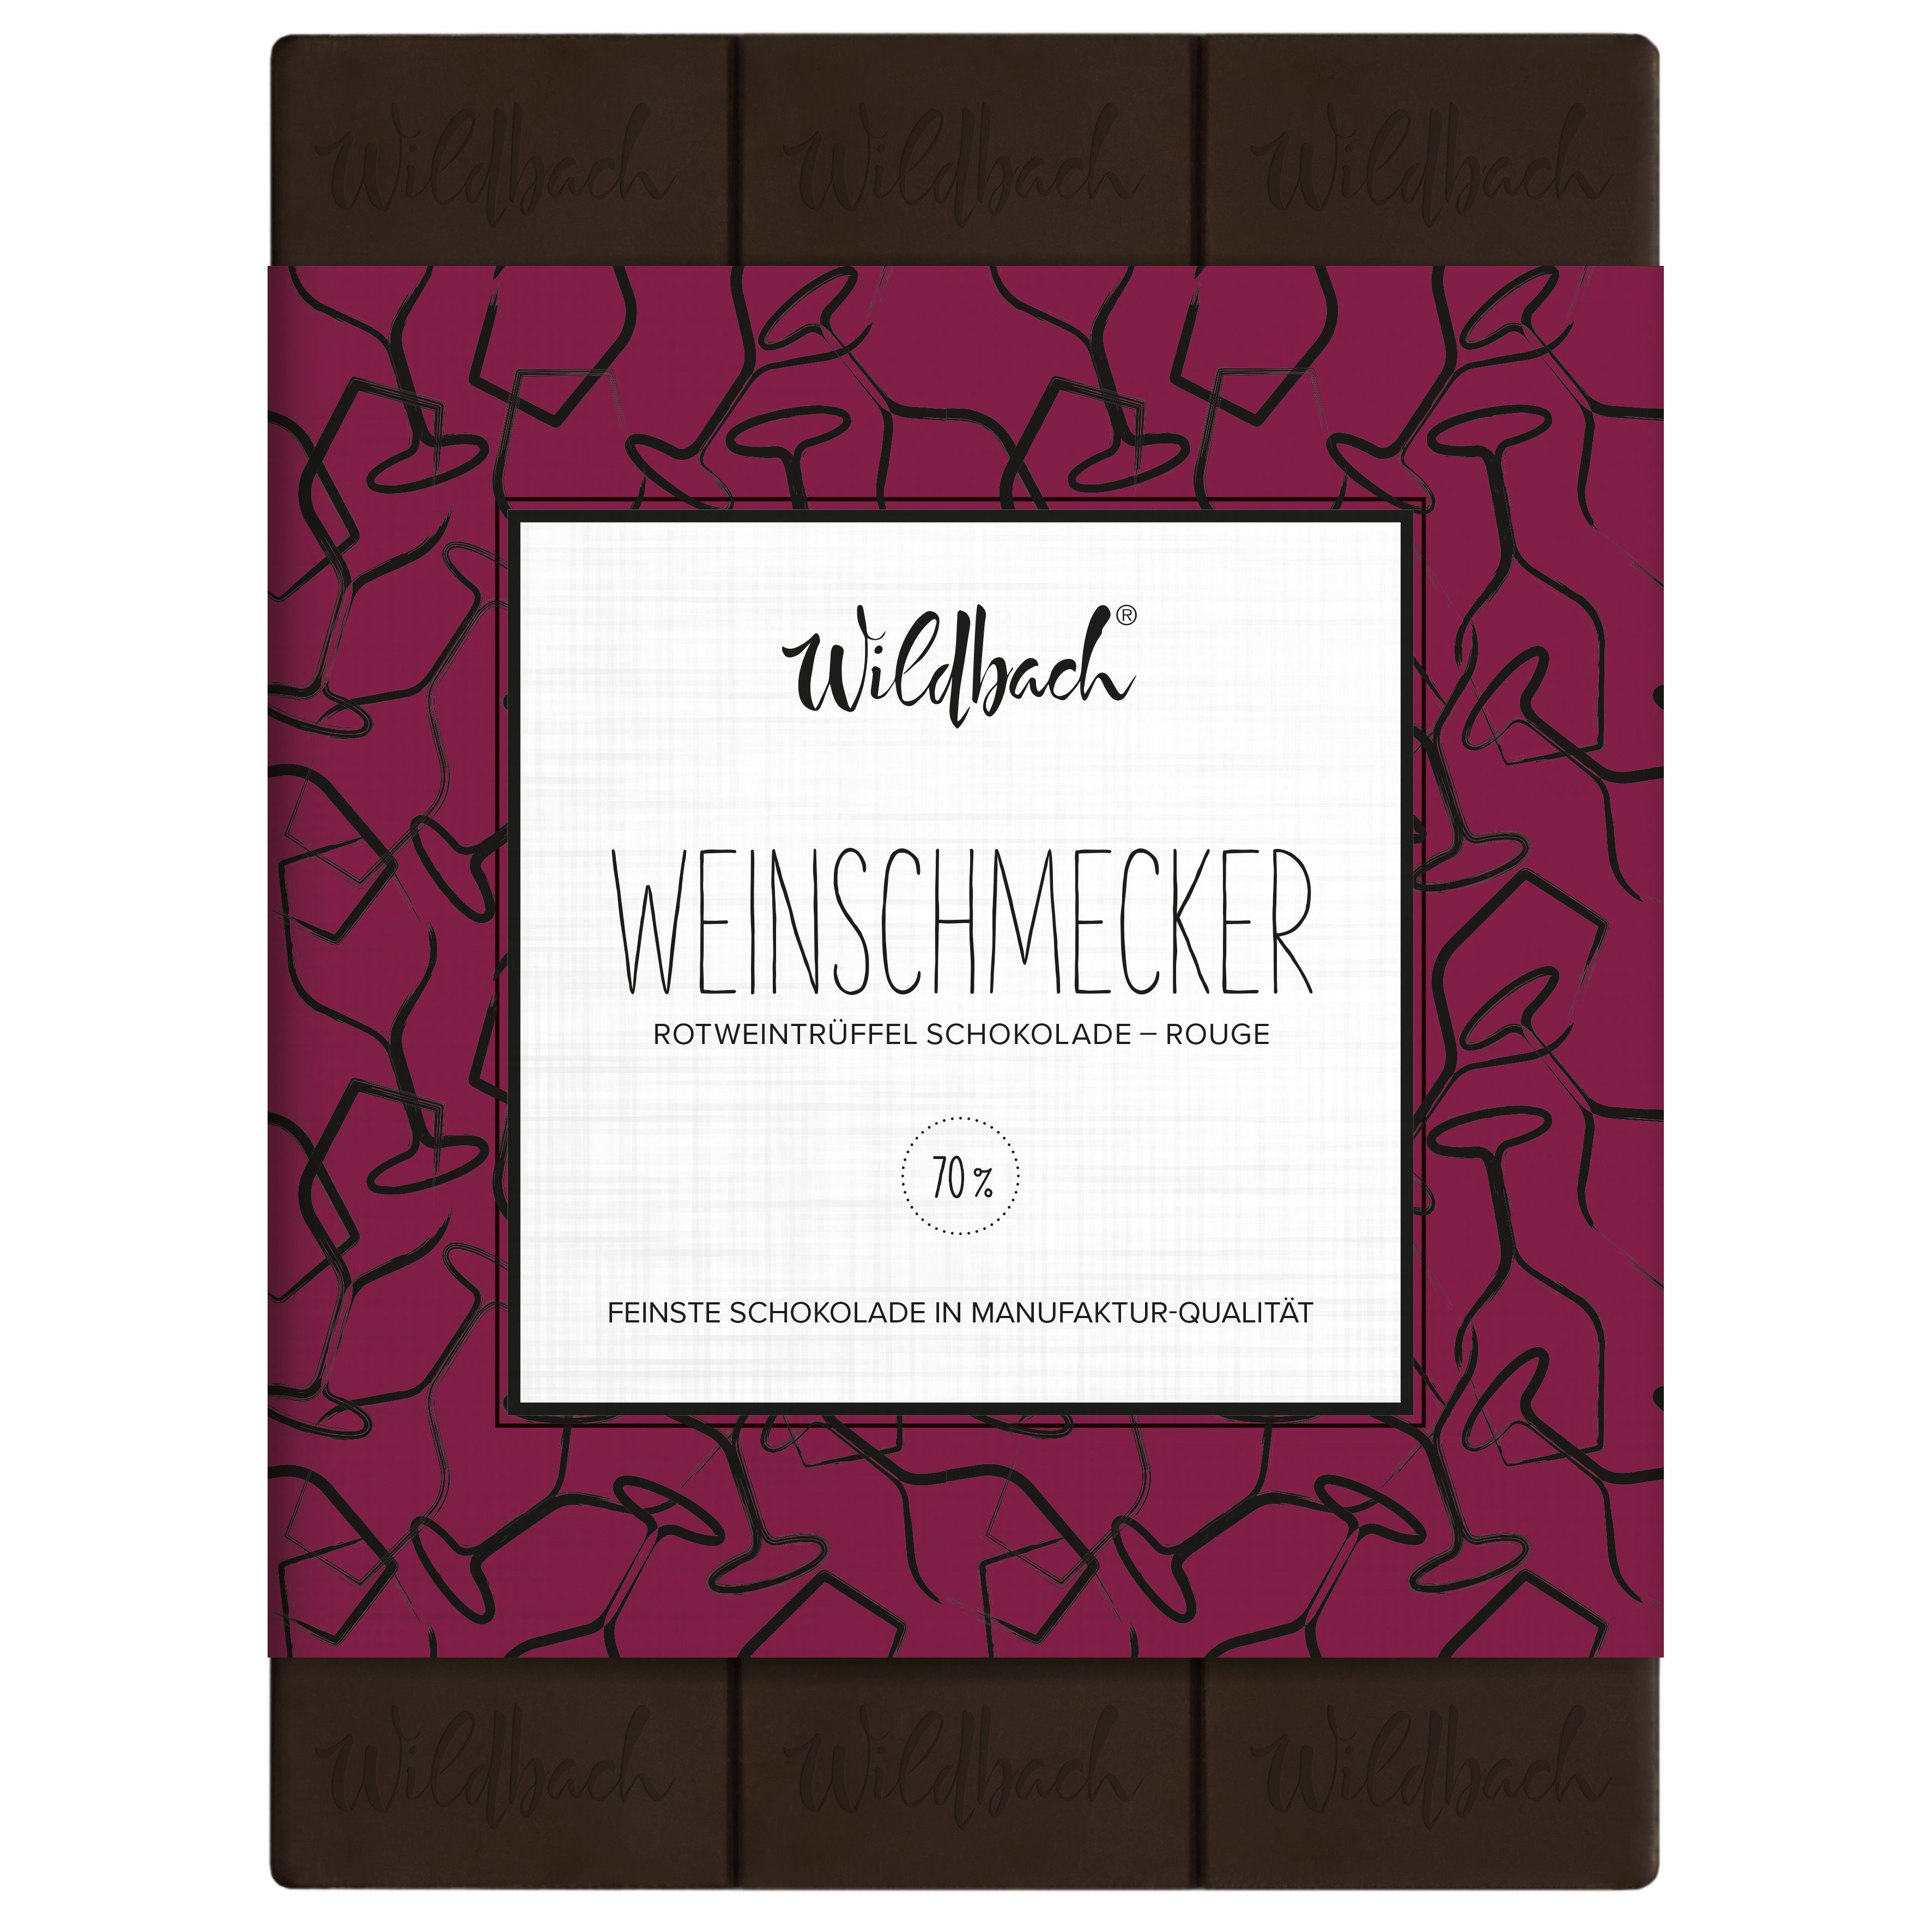 70g Tafel Weinschmecker Rouge - Edelzartbitterschokolade 70% mit Rotweintrüffel